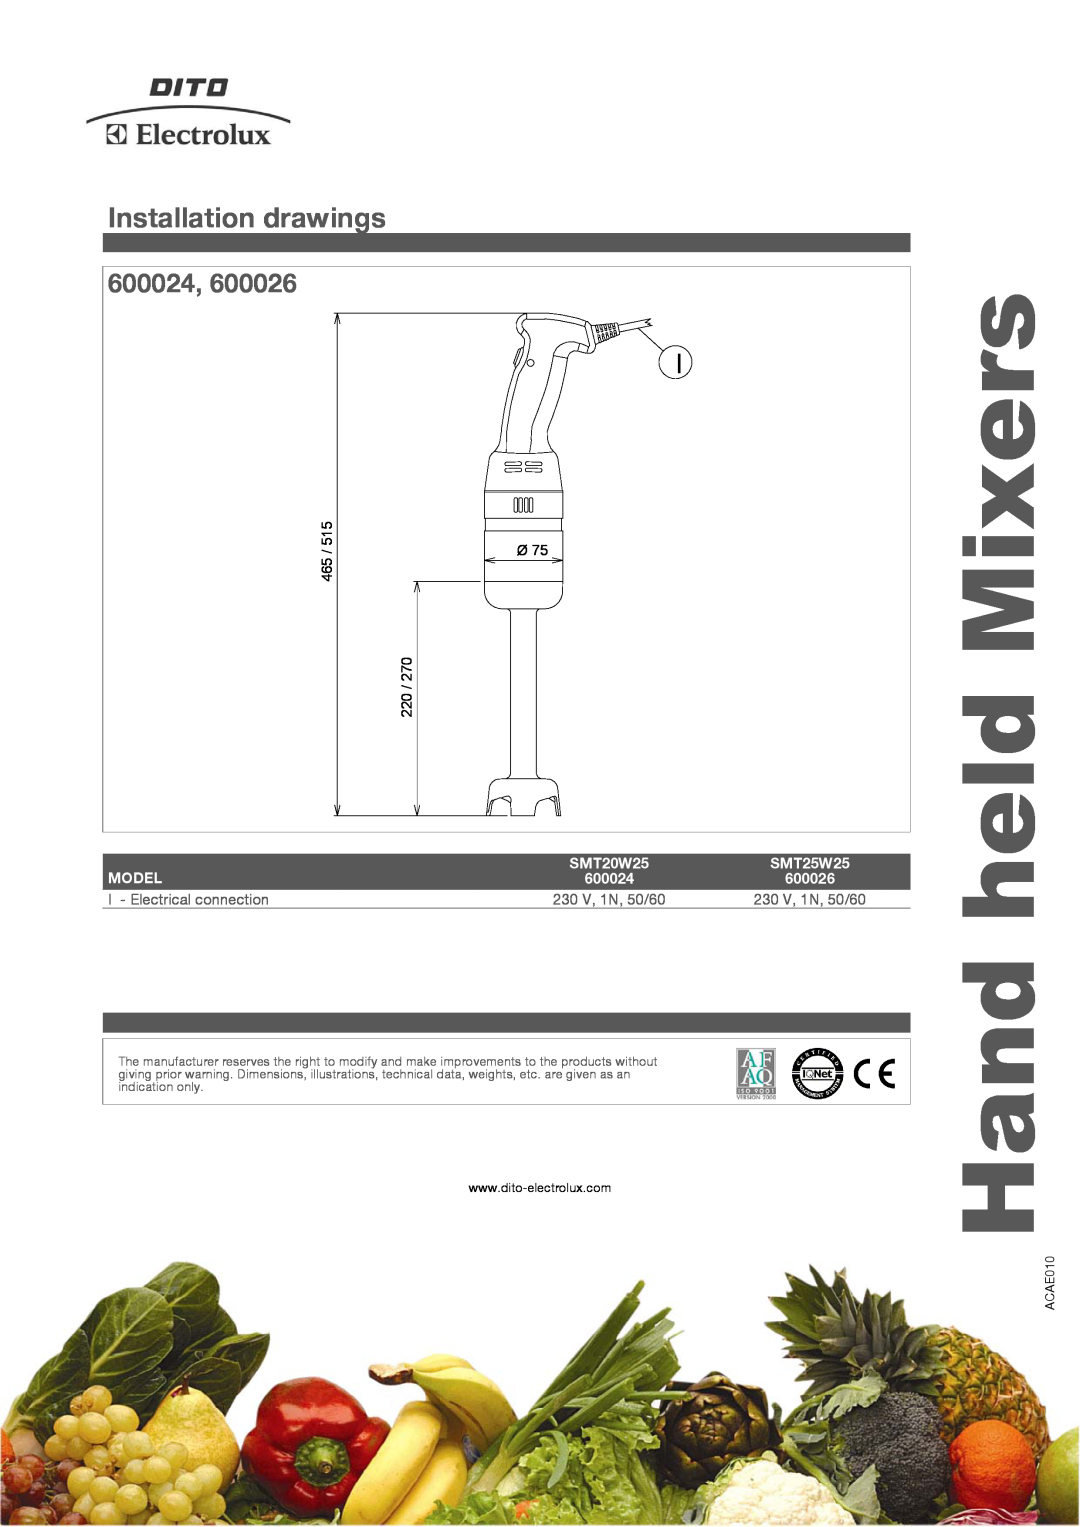 Electrolux 600024 manual Mixers, Installation drawings, held, Hand, 515/465, SMT25W25, Model, SMT20W25, 600026 